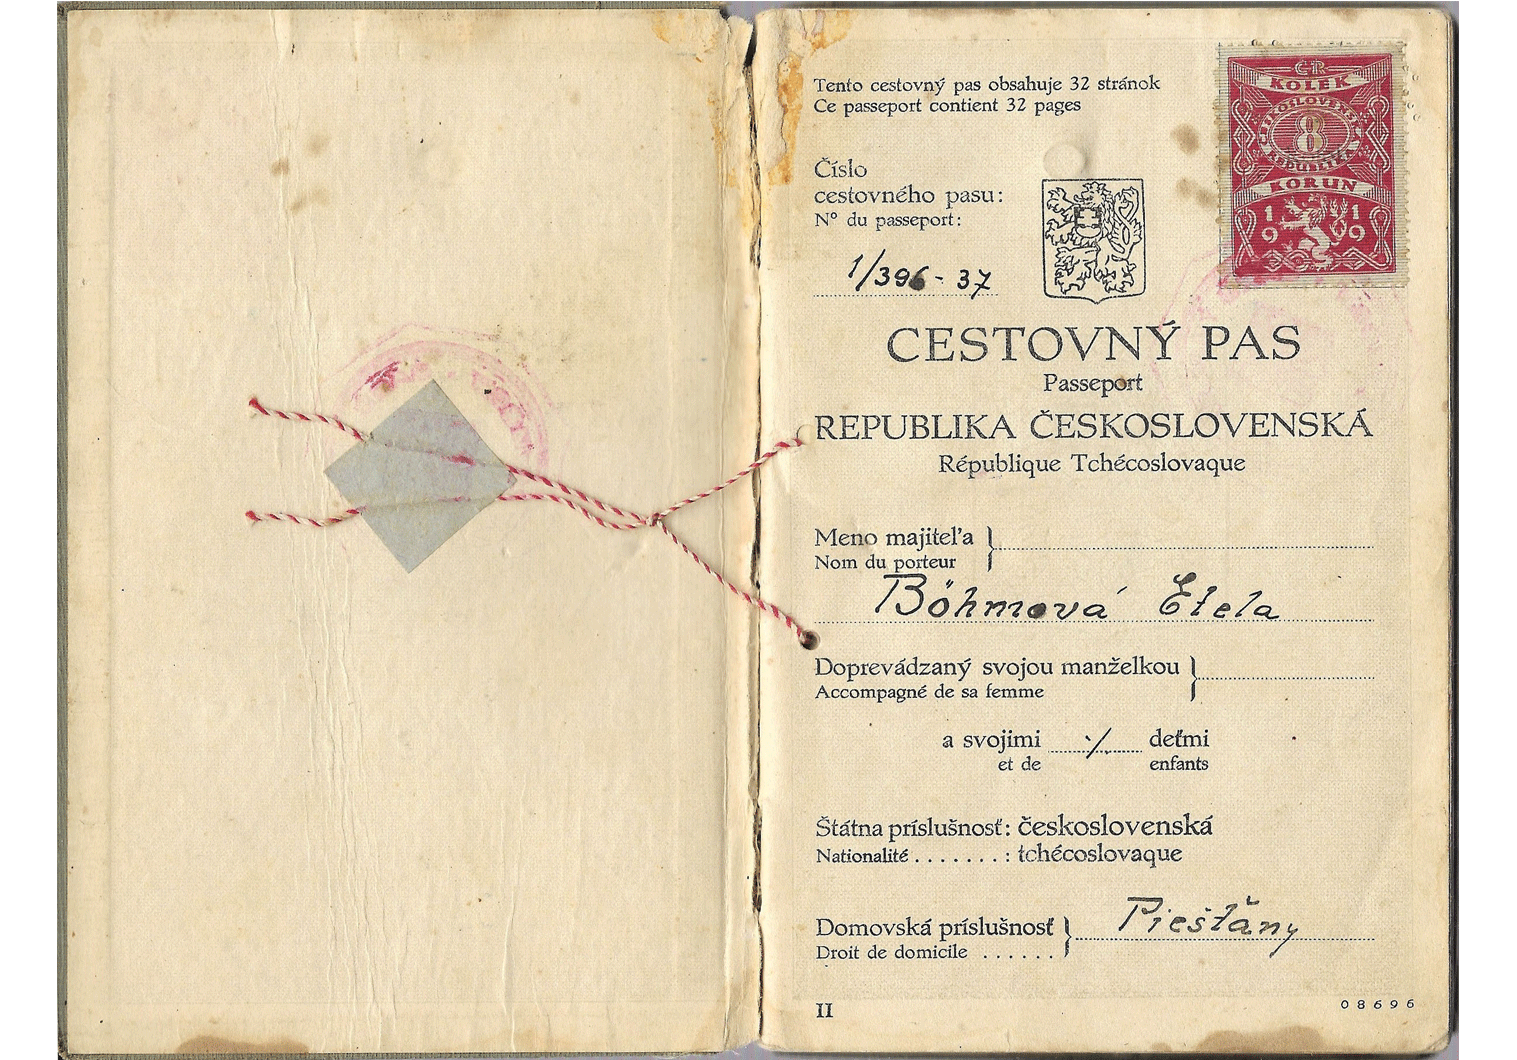 WW2 refugee passport